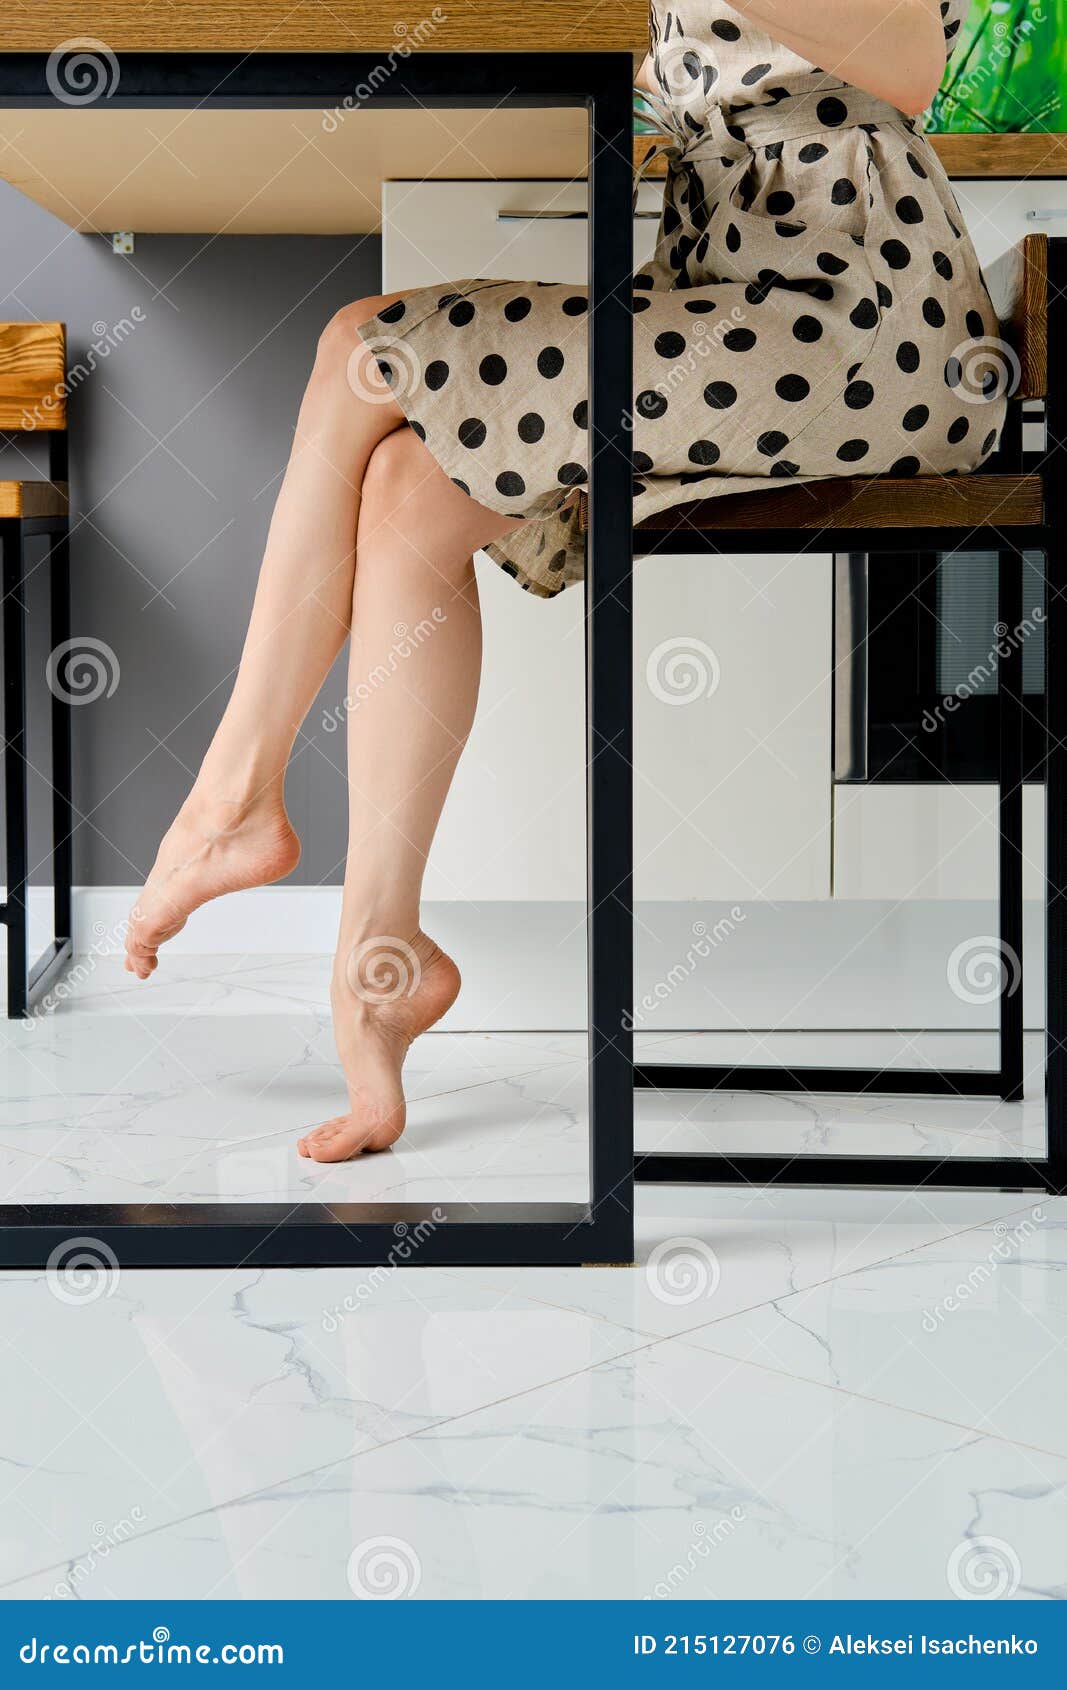 Girls Under Desk Legs Telegraph